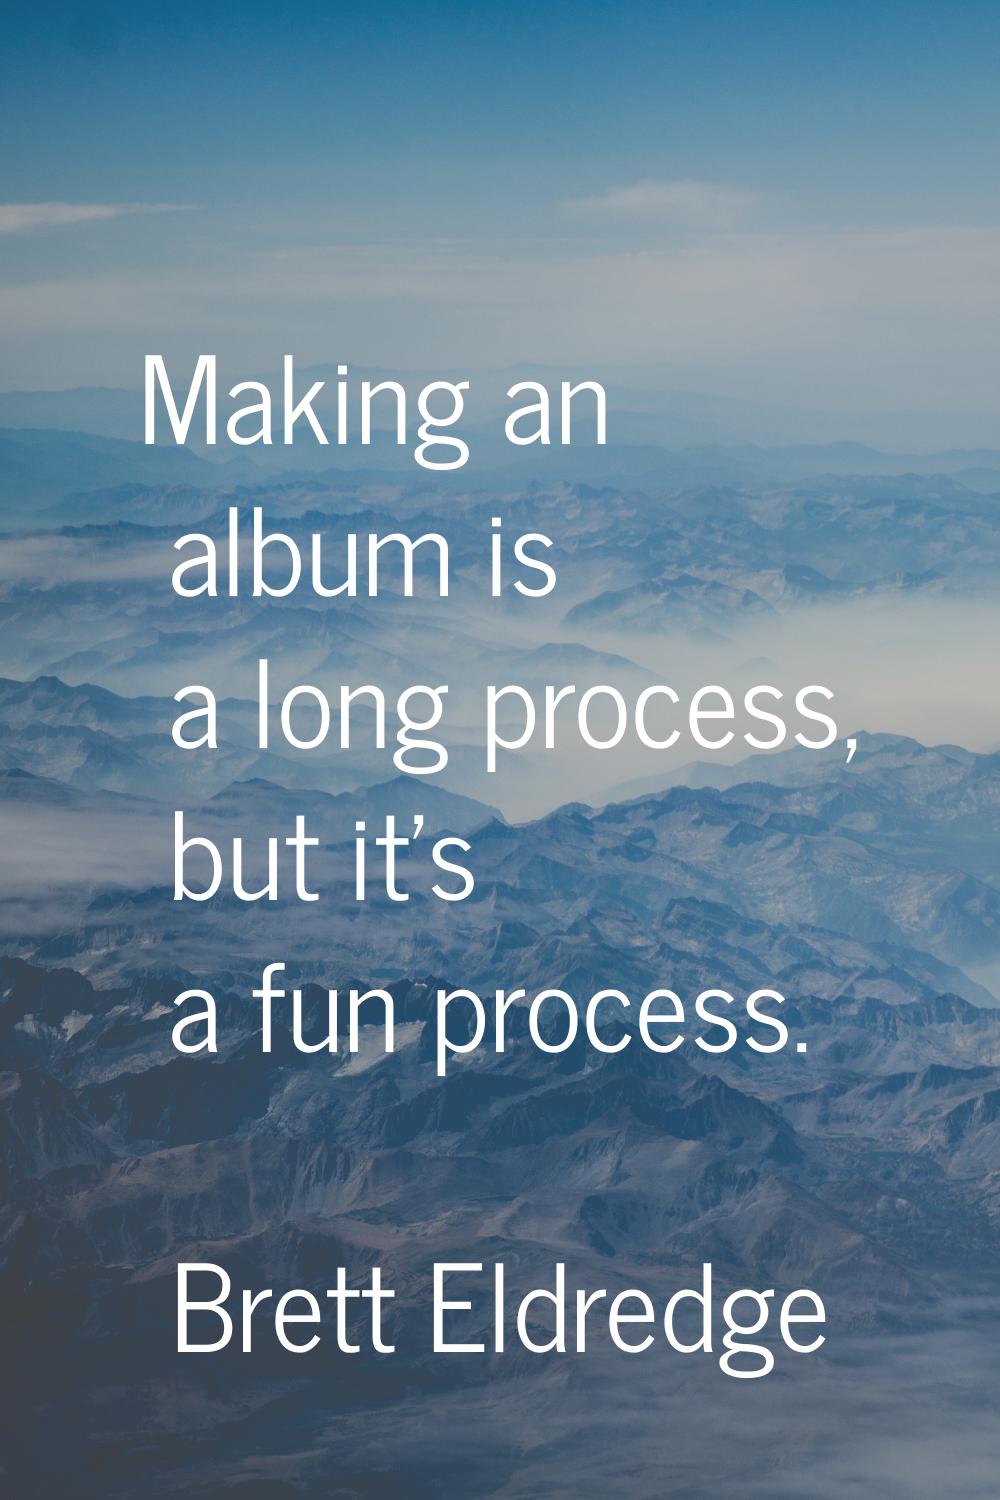 Making an album is a long process, but it's a fun process.